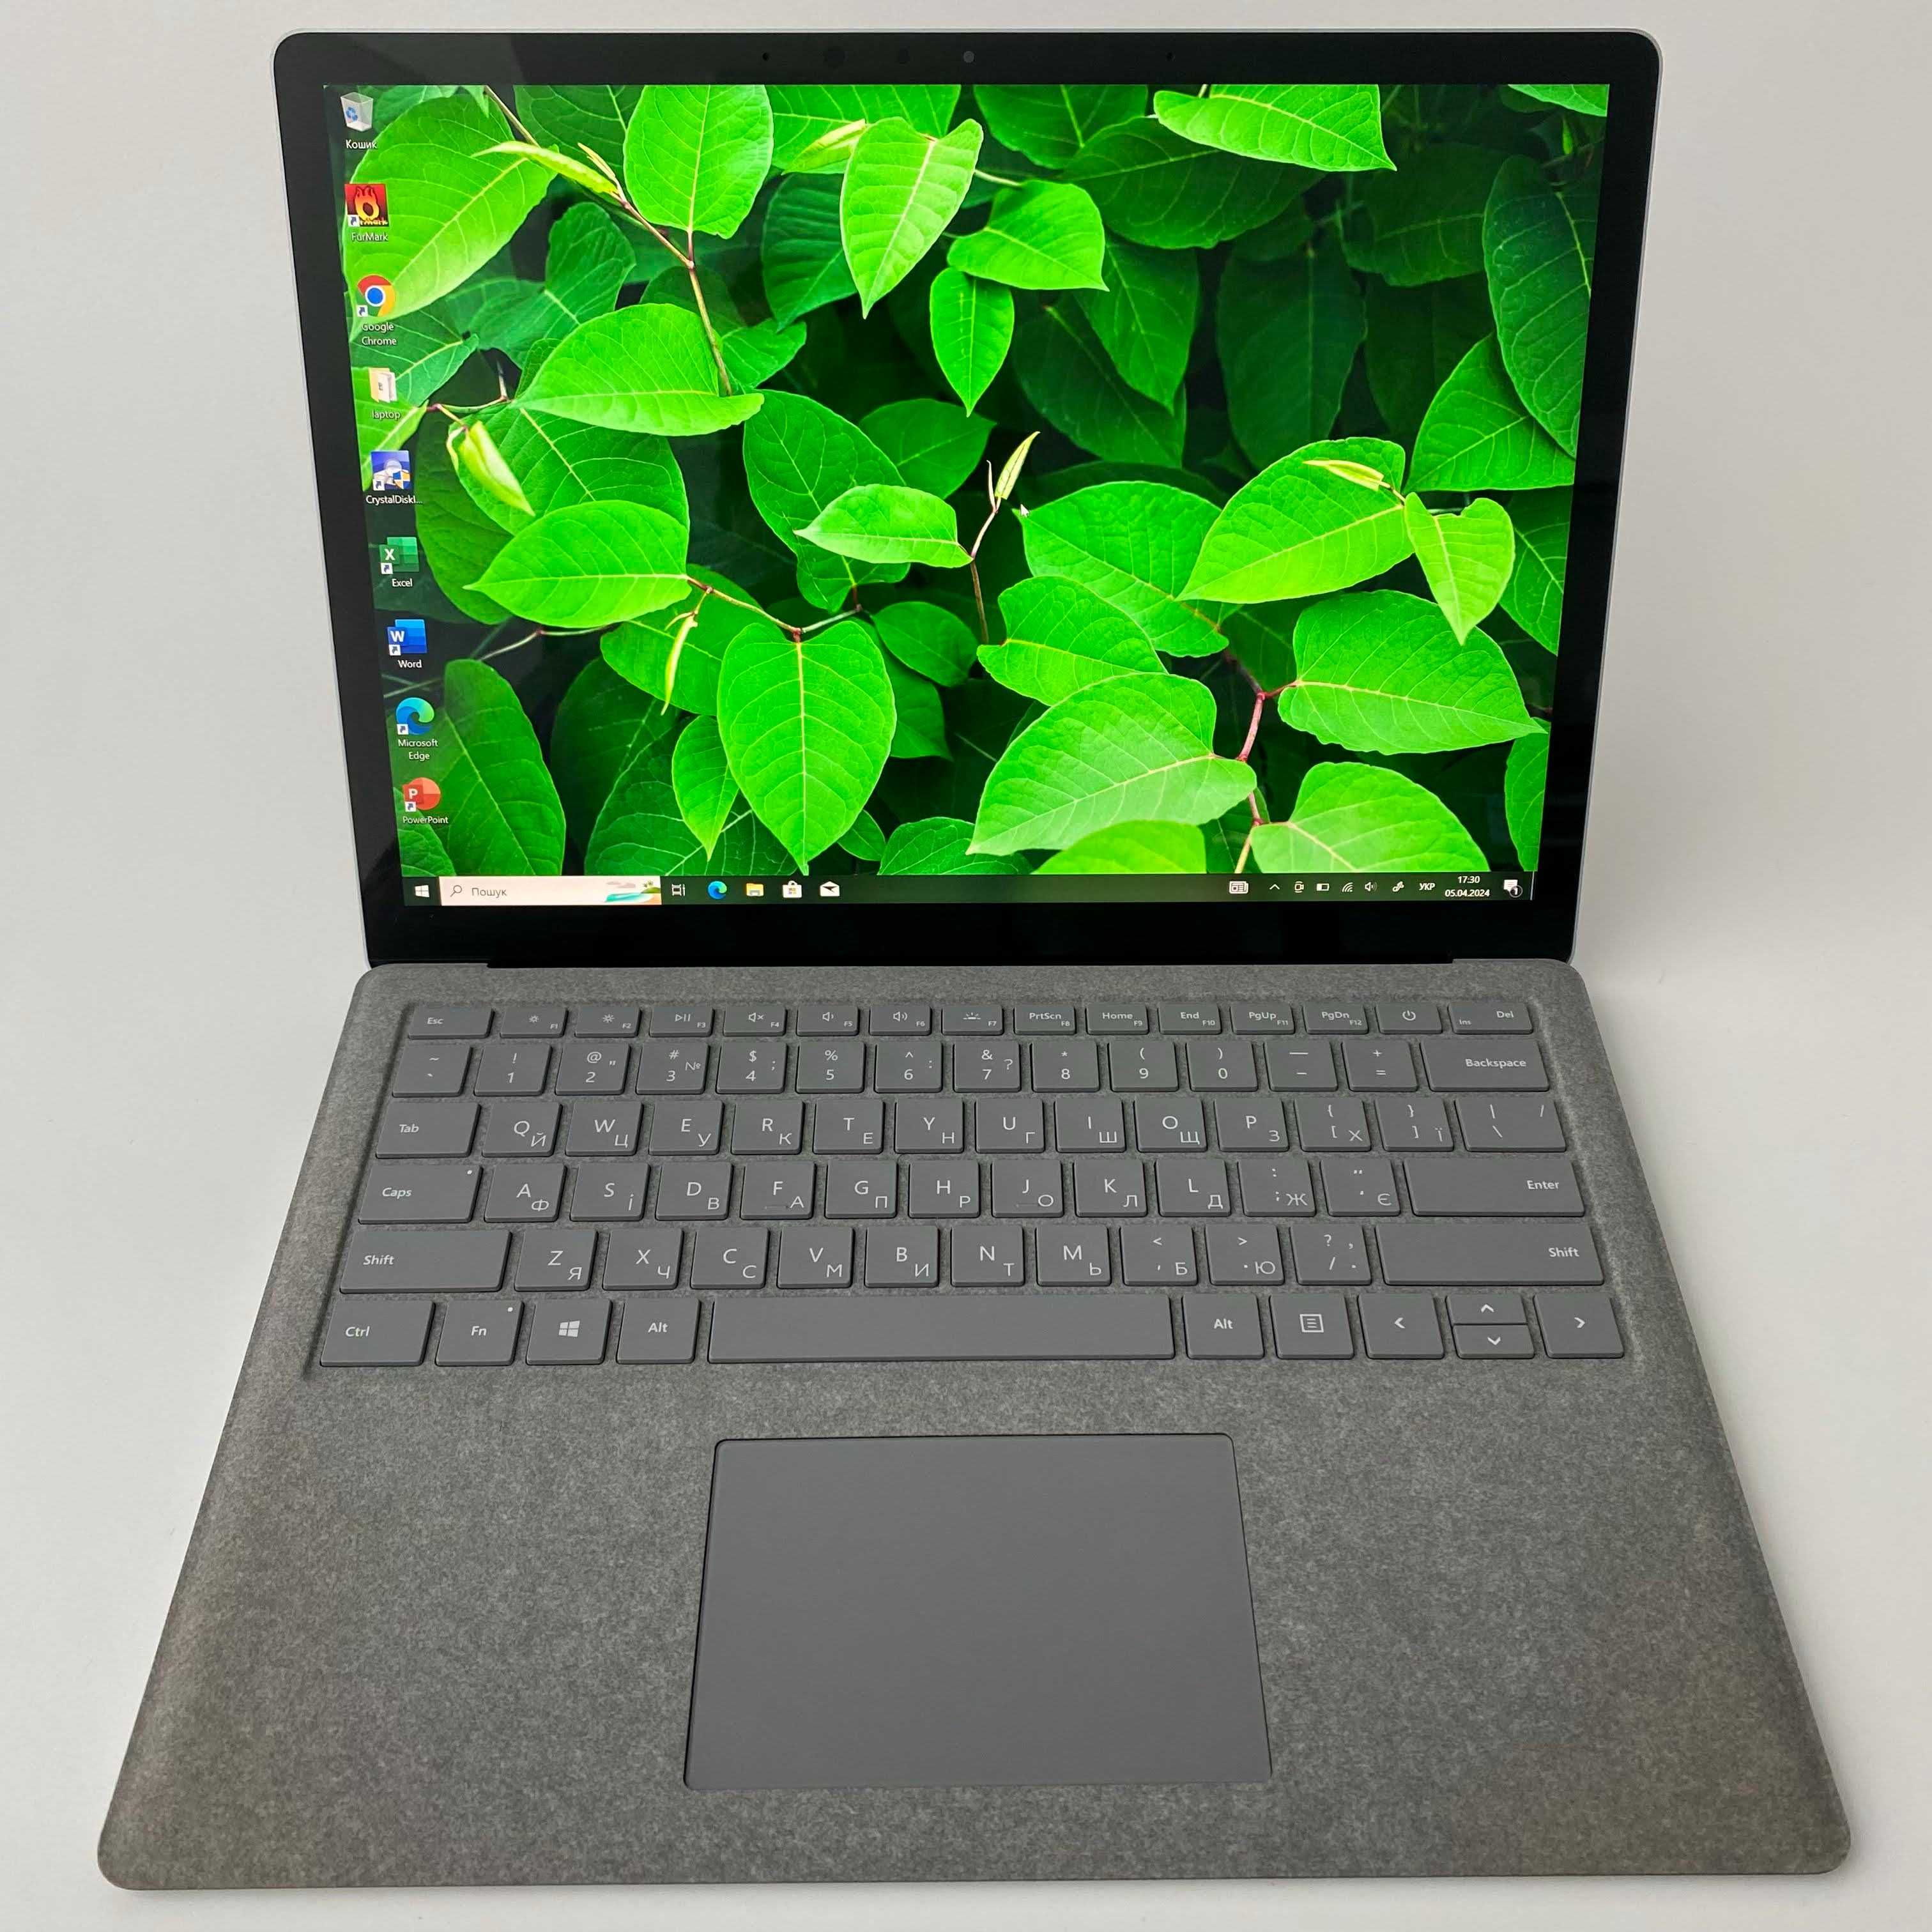 Ноутбук Microsoft Surface Laptop 2 QHD i7-8650U/16GB RAM/512GB SSD